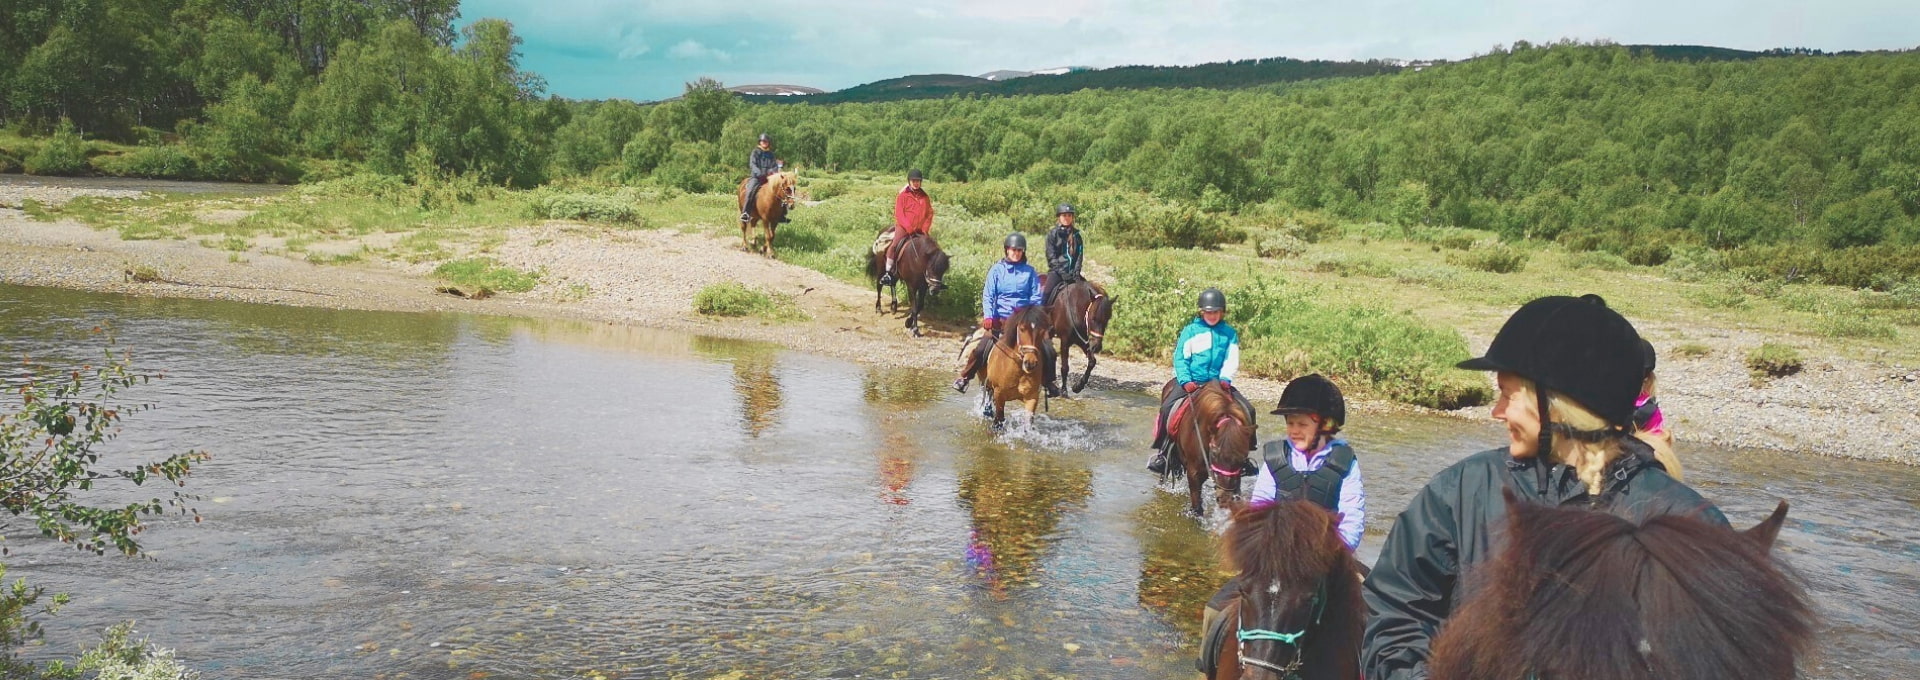 Riders on Icelandic horses in Ramundberget